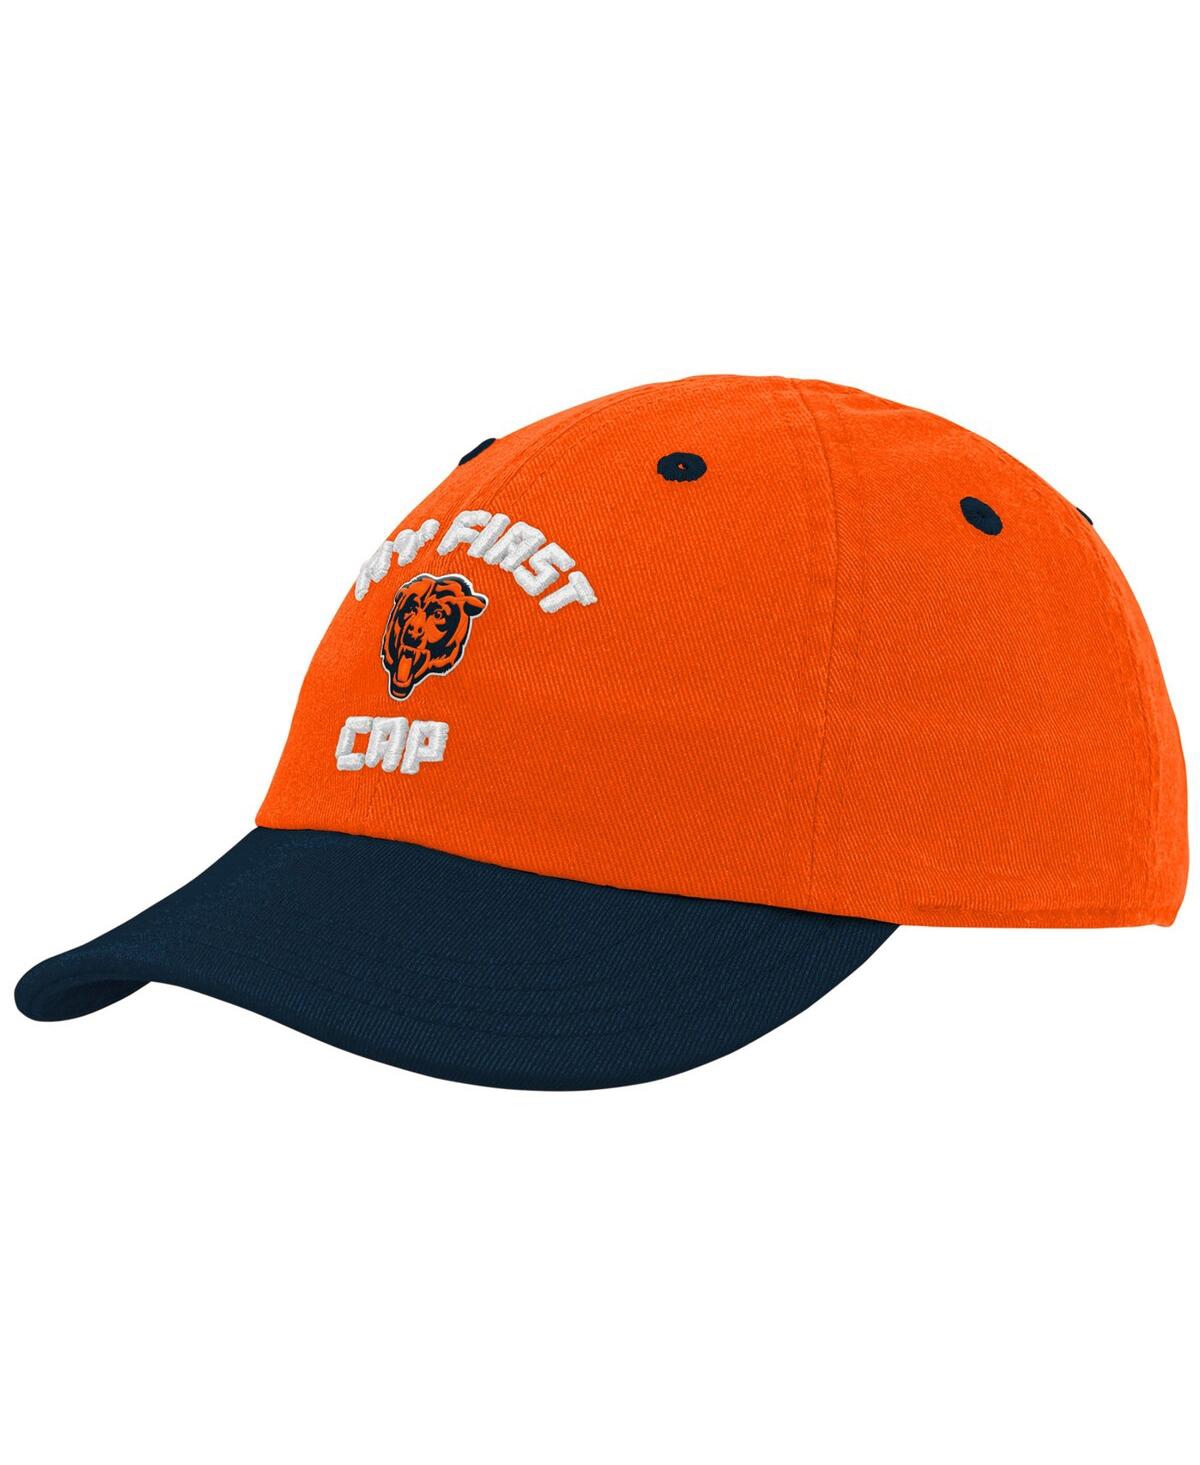 Outerstuff Babies' Infant Unisex's Orange Chicago Bears My First Pixel Slouch Flex Hat